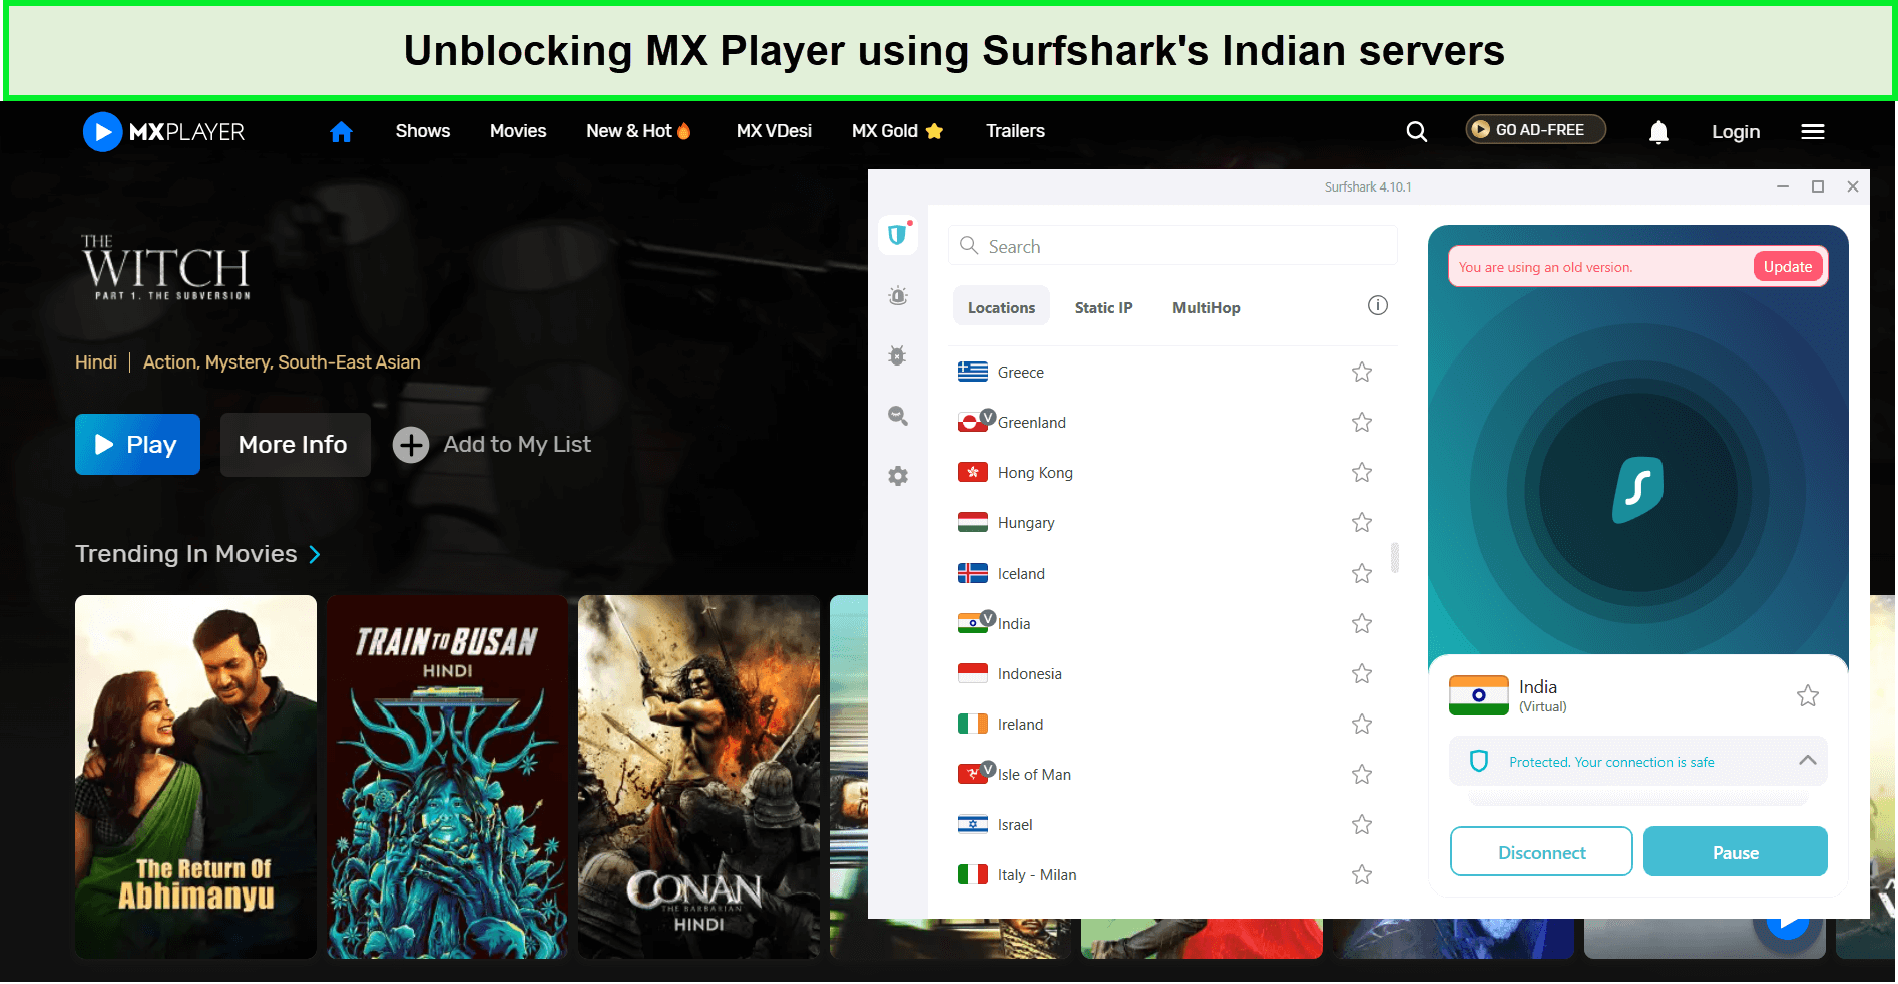 mx-player-in-Spain-unblocked-surfshark